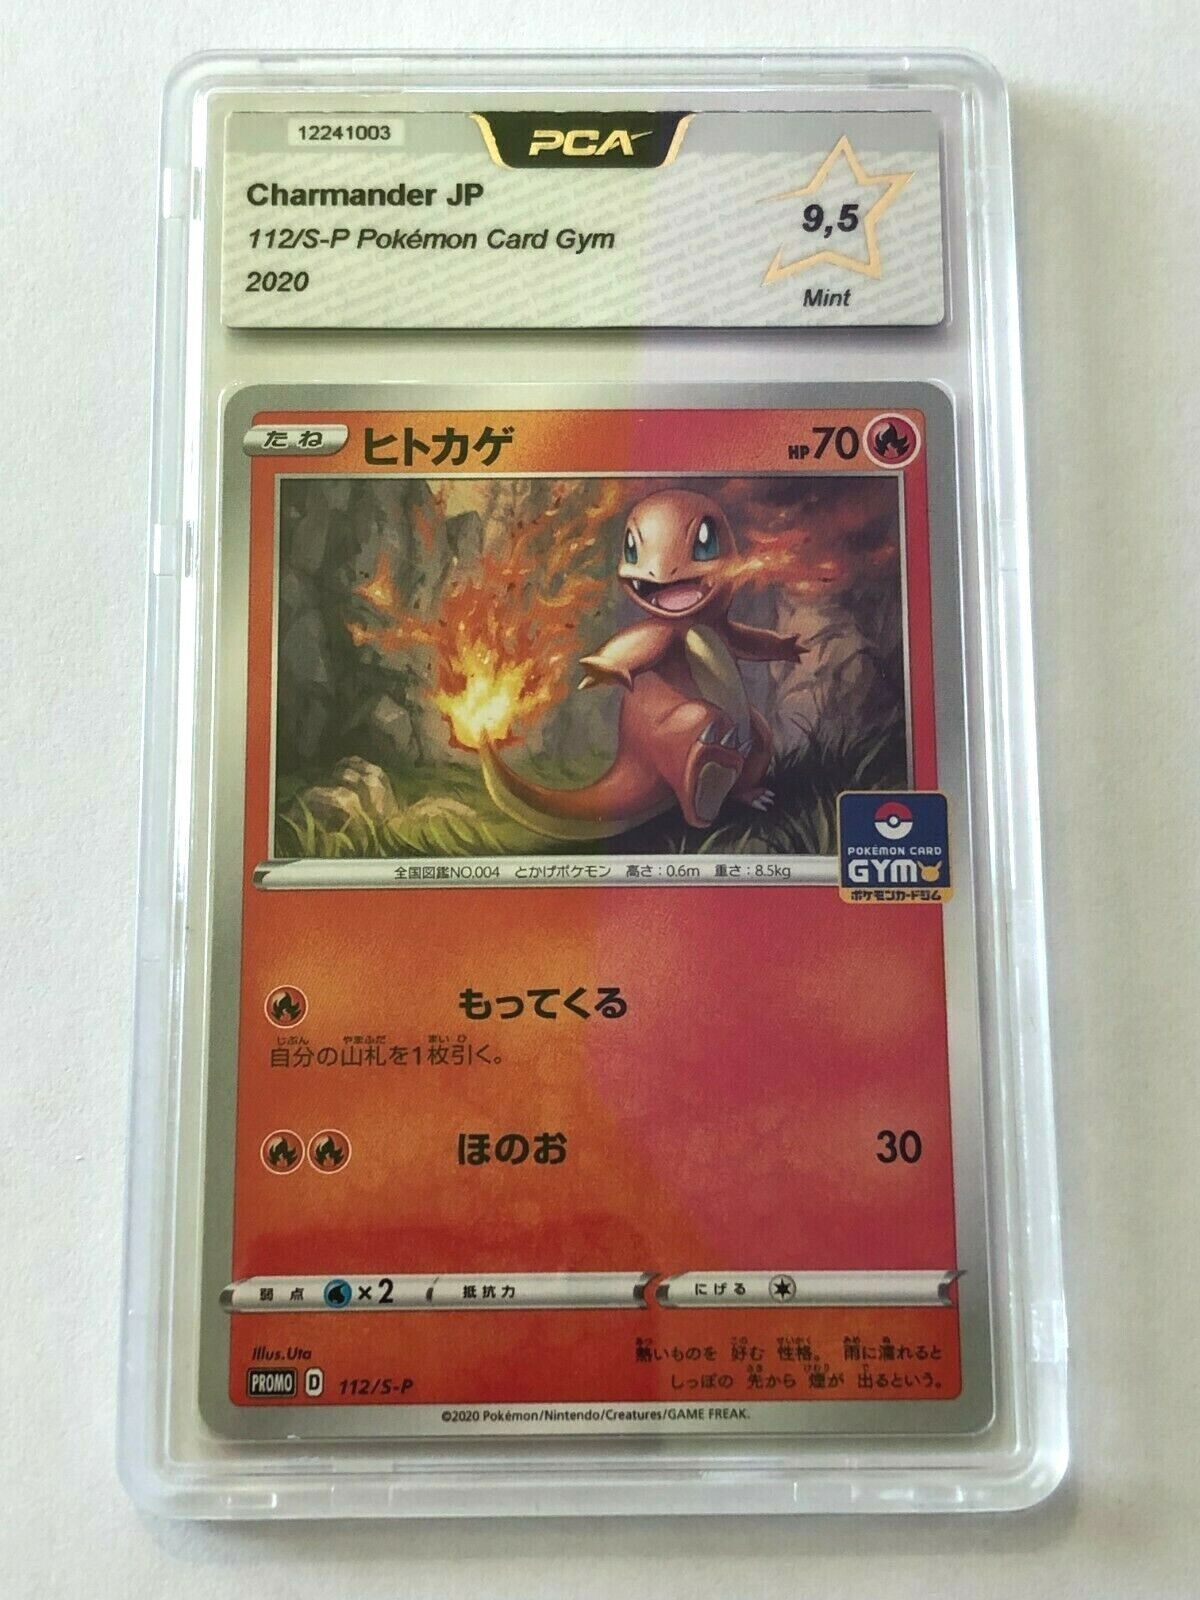 zPokemon Card - PCA 9.5 - Charmander JP - 112/S-P Pokemon Card Gym